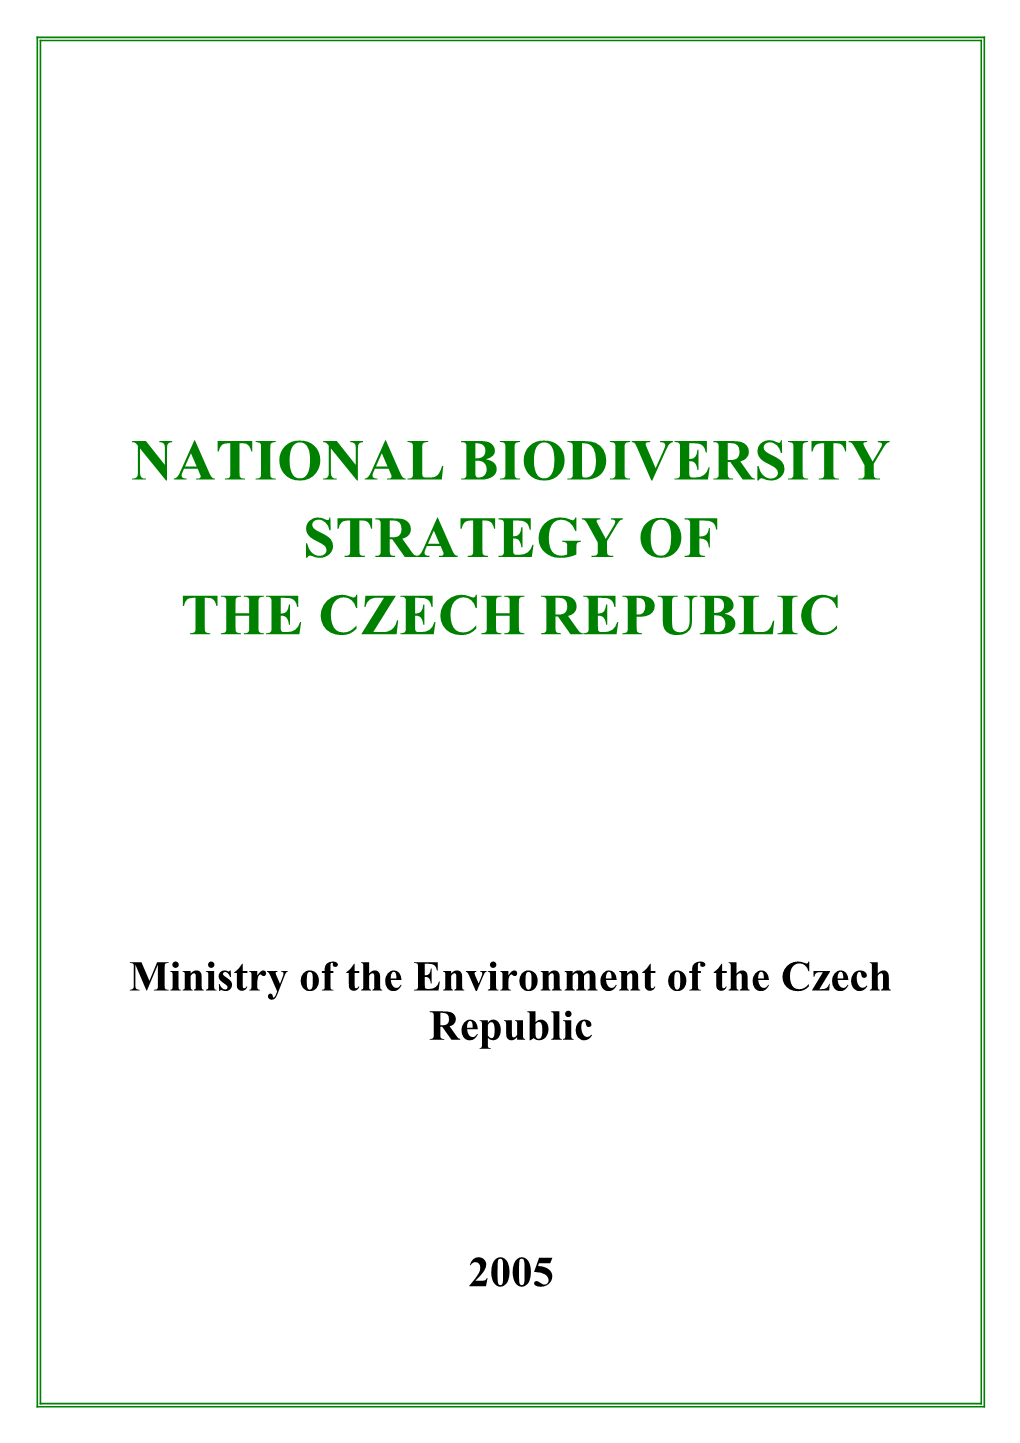 CBD Strategy and Action Plan - Czech Republic (English Version)